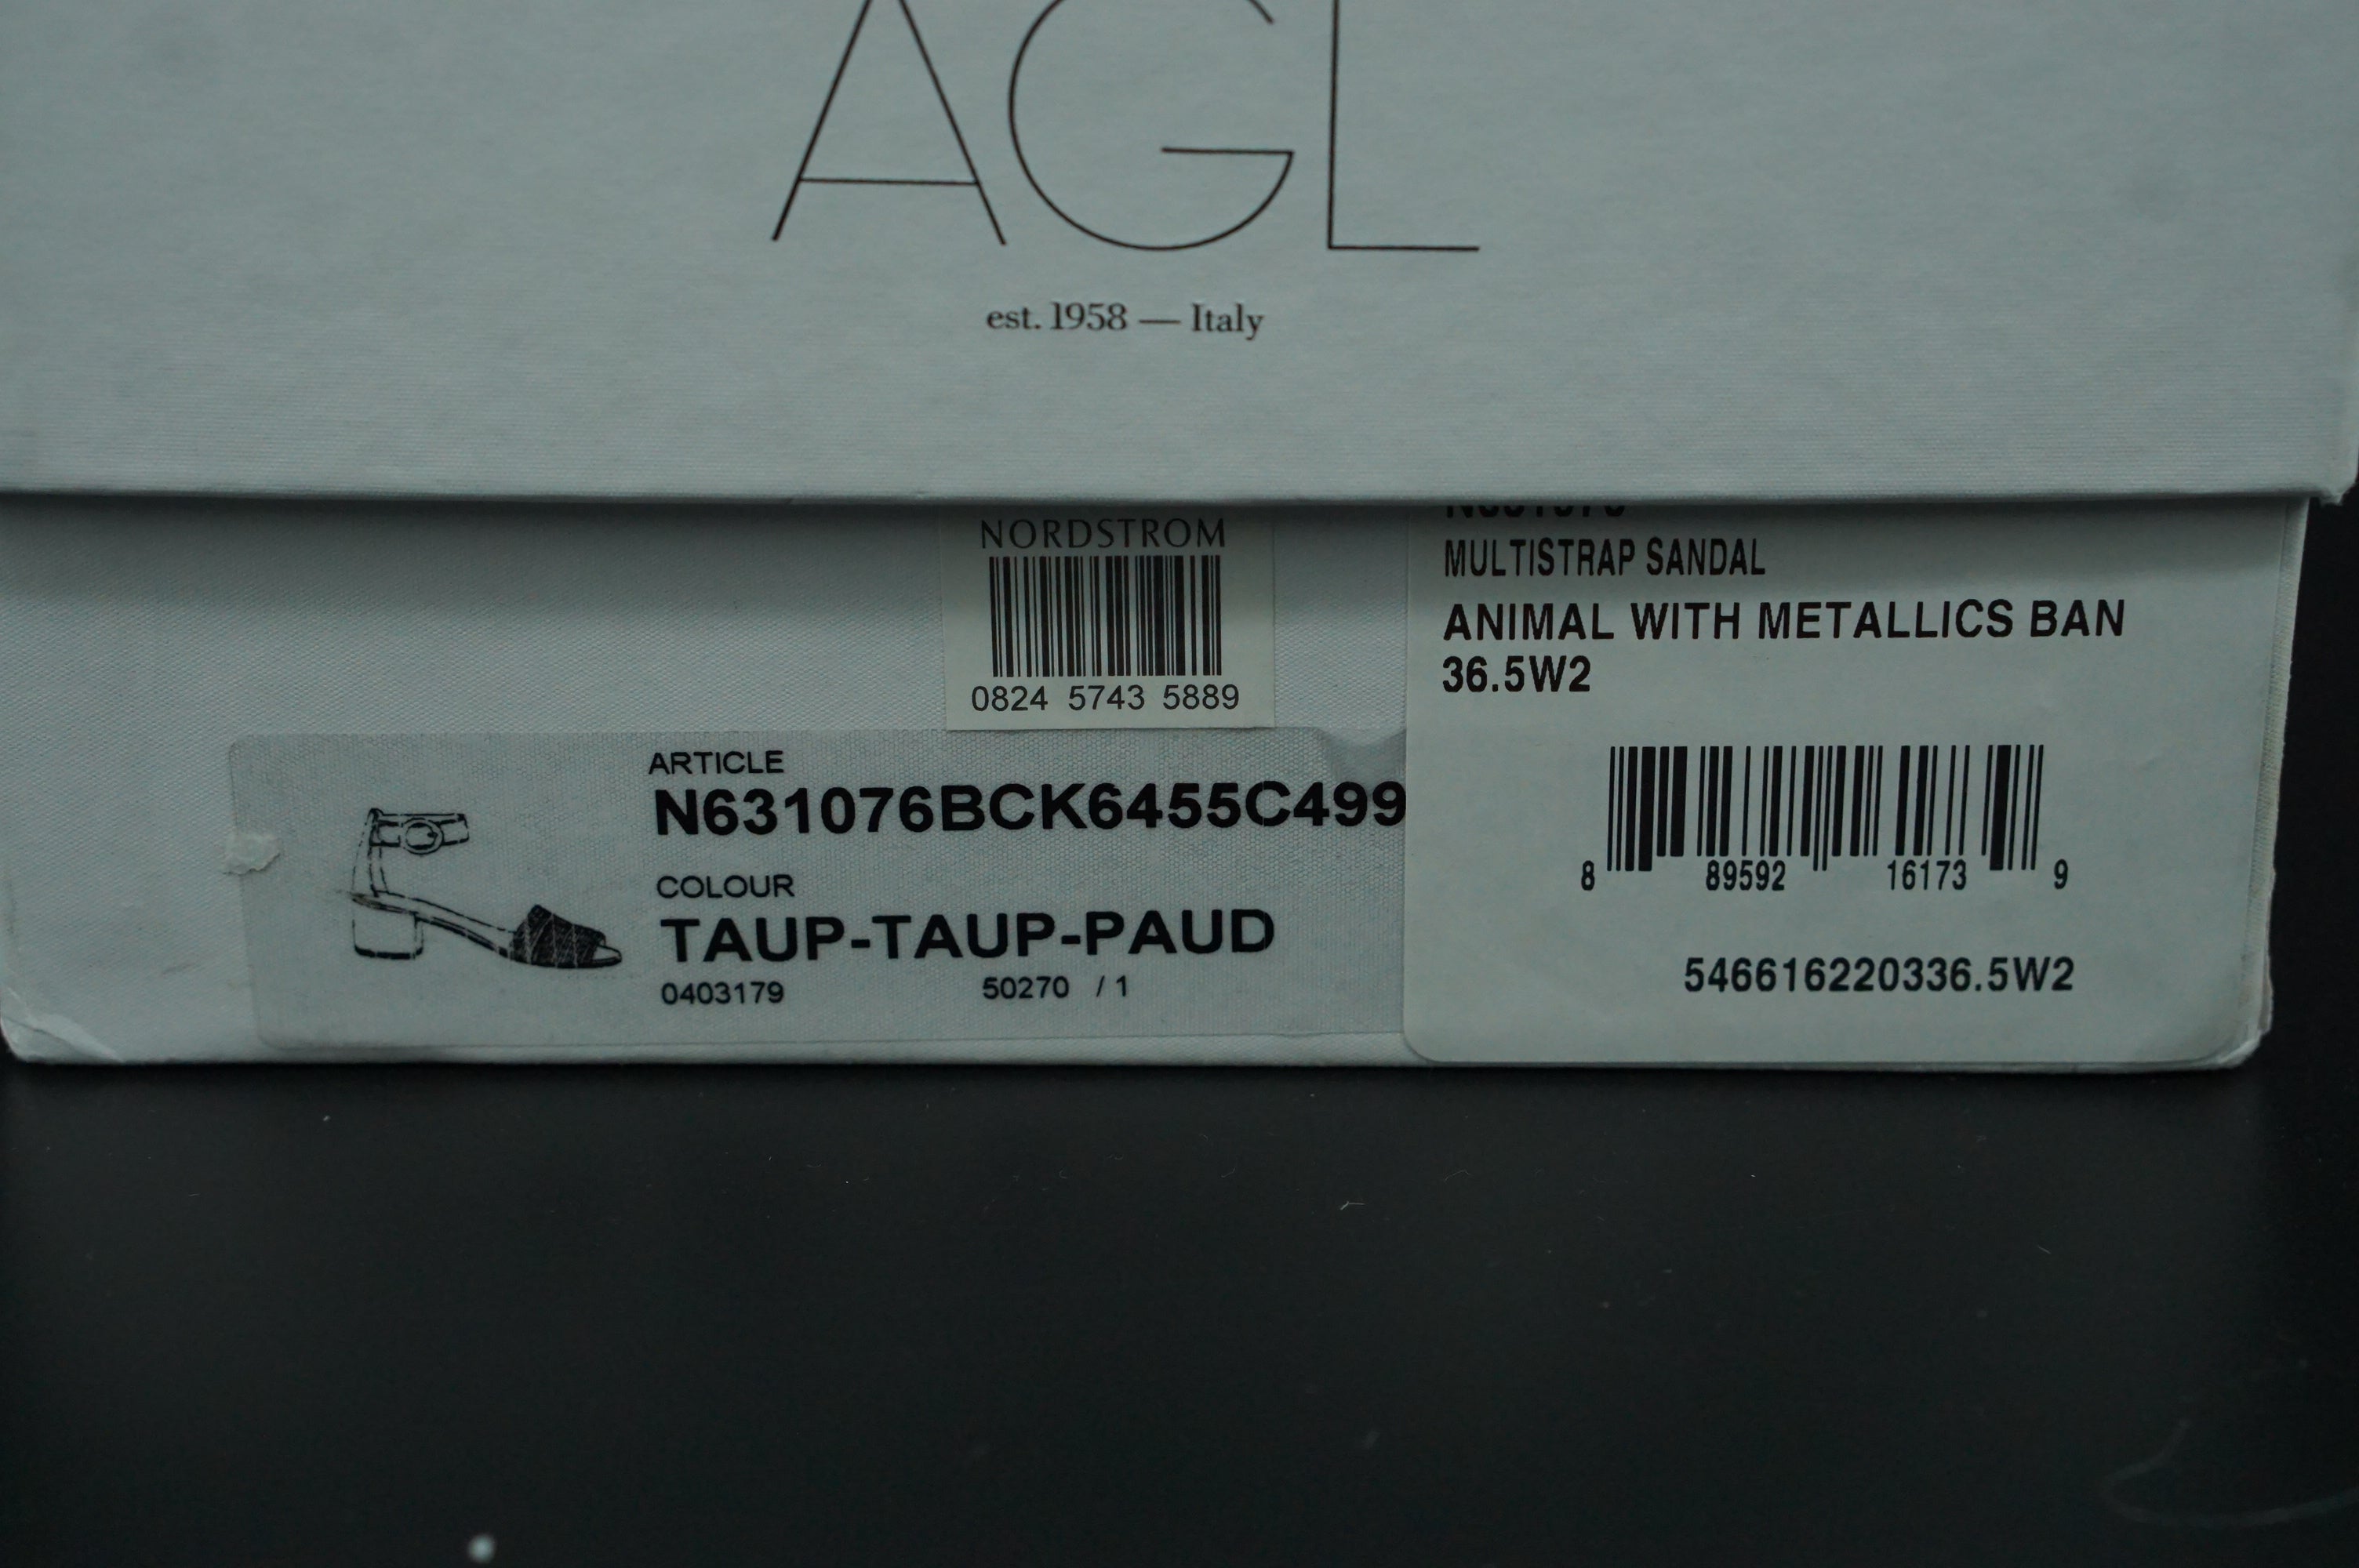 Attilio Giusti Leombruni Ankle Strap Block Heel Sandal Size 36.5 NIB AGL $340